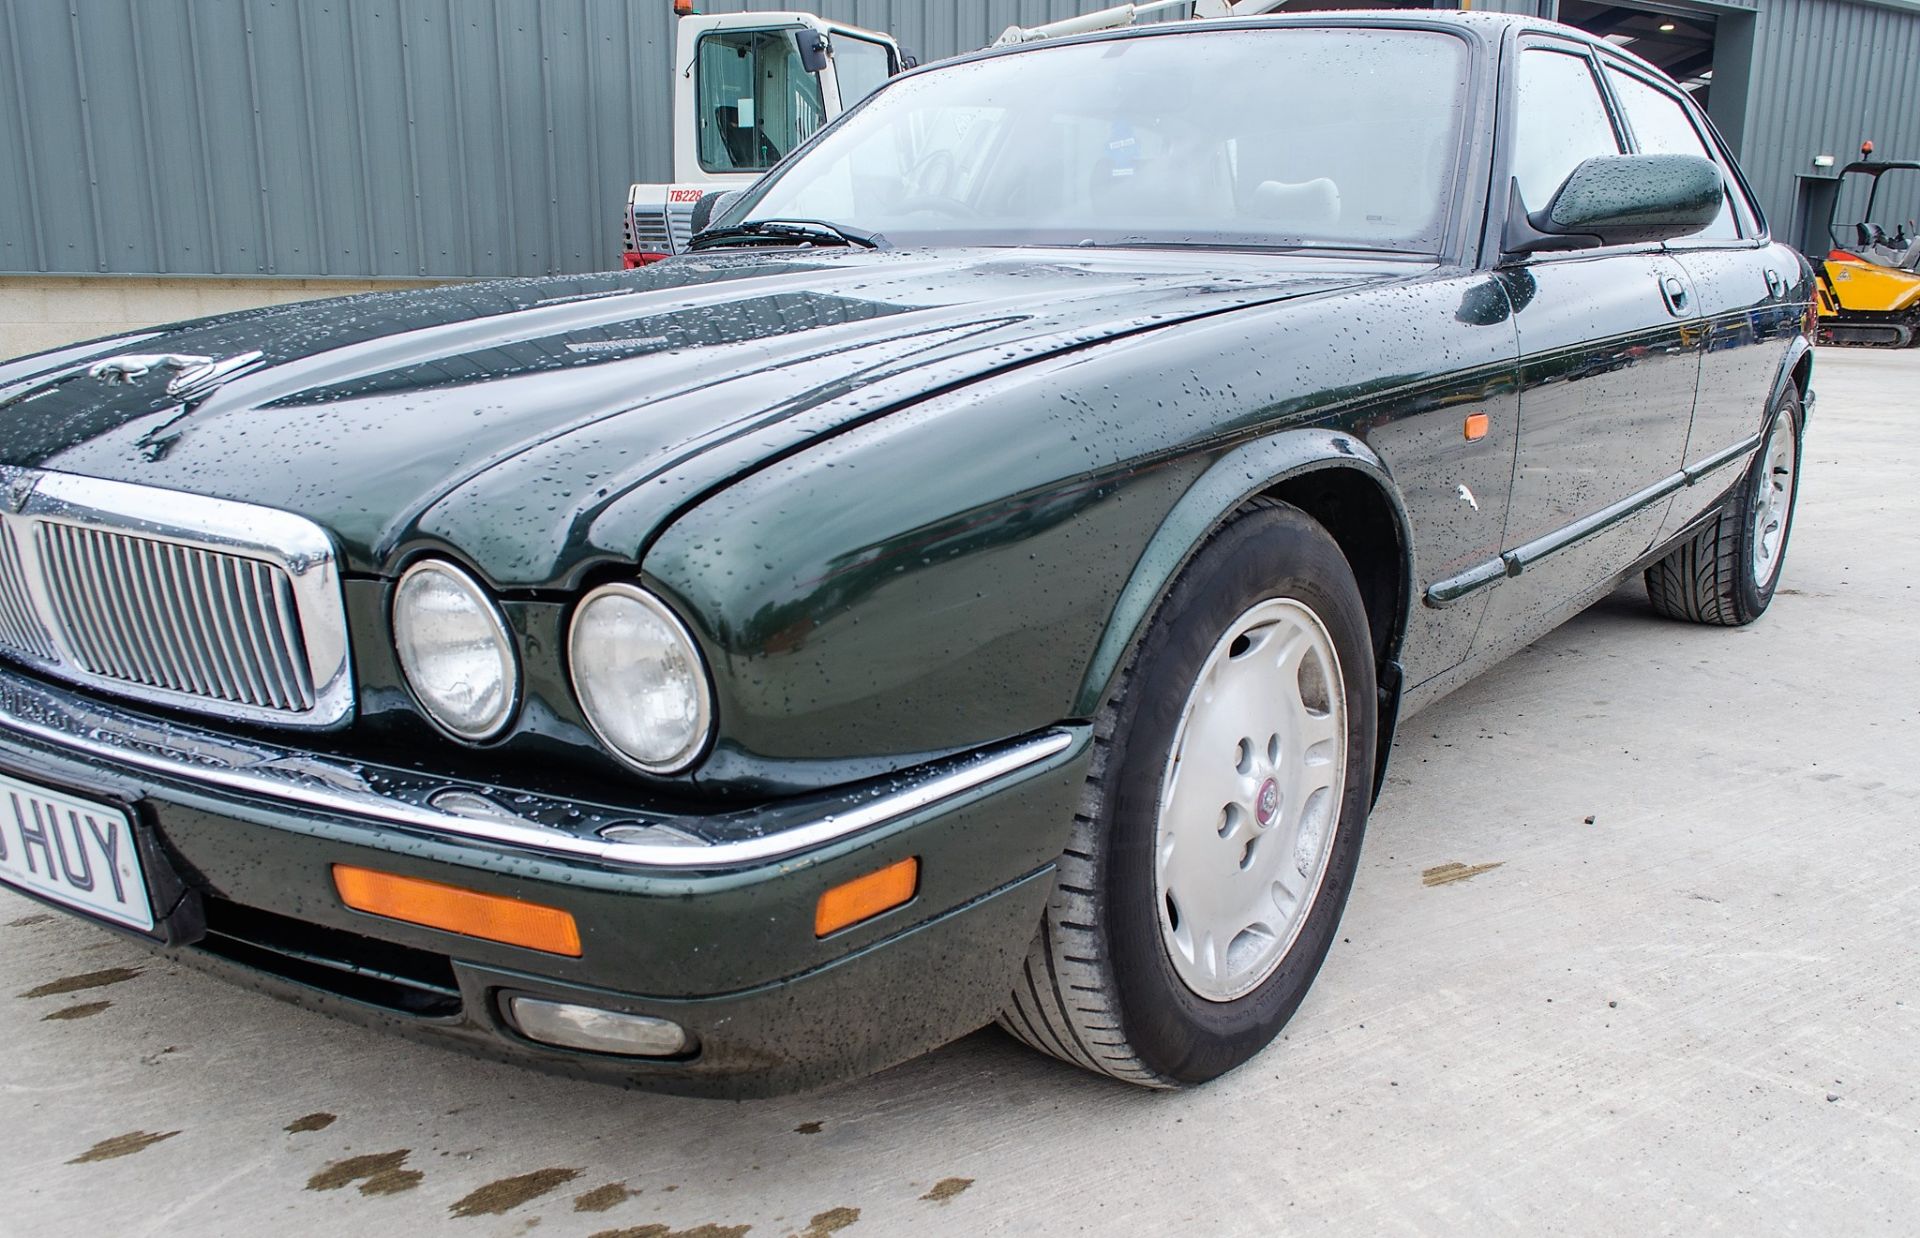 Jaguar XJ6 3.2 Sport petrol automatic 4 door saloon car Registration Number: N586 HUY Date of - Image 9 of 28